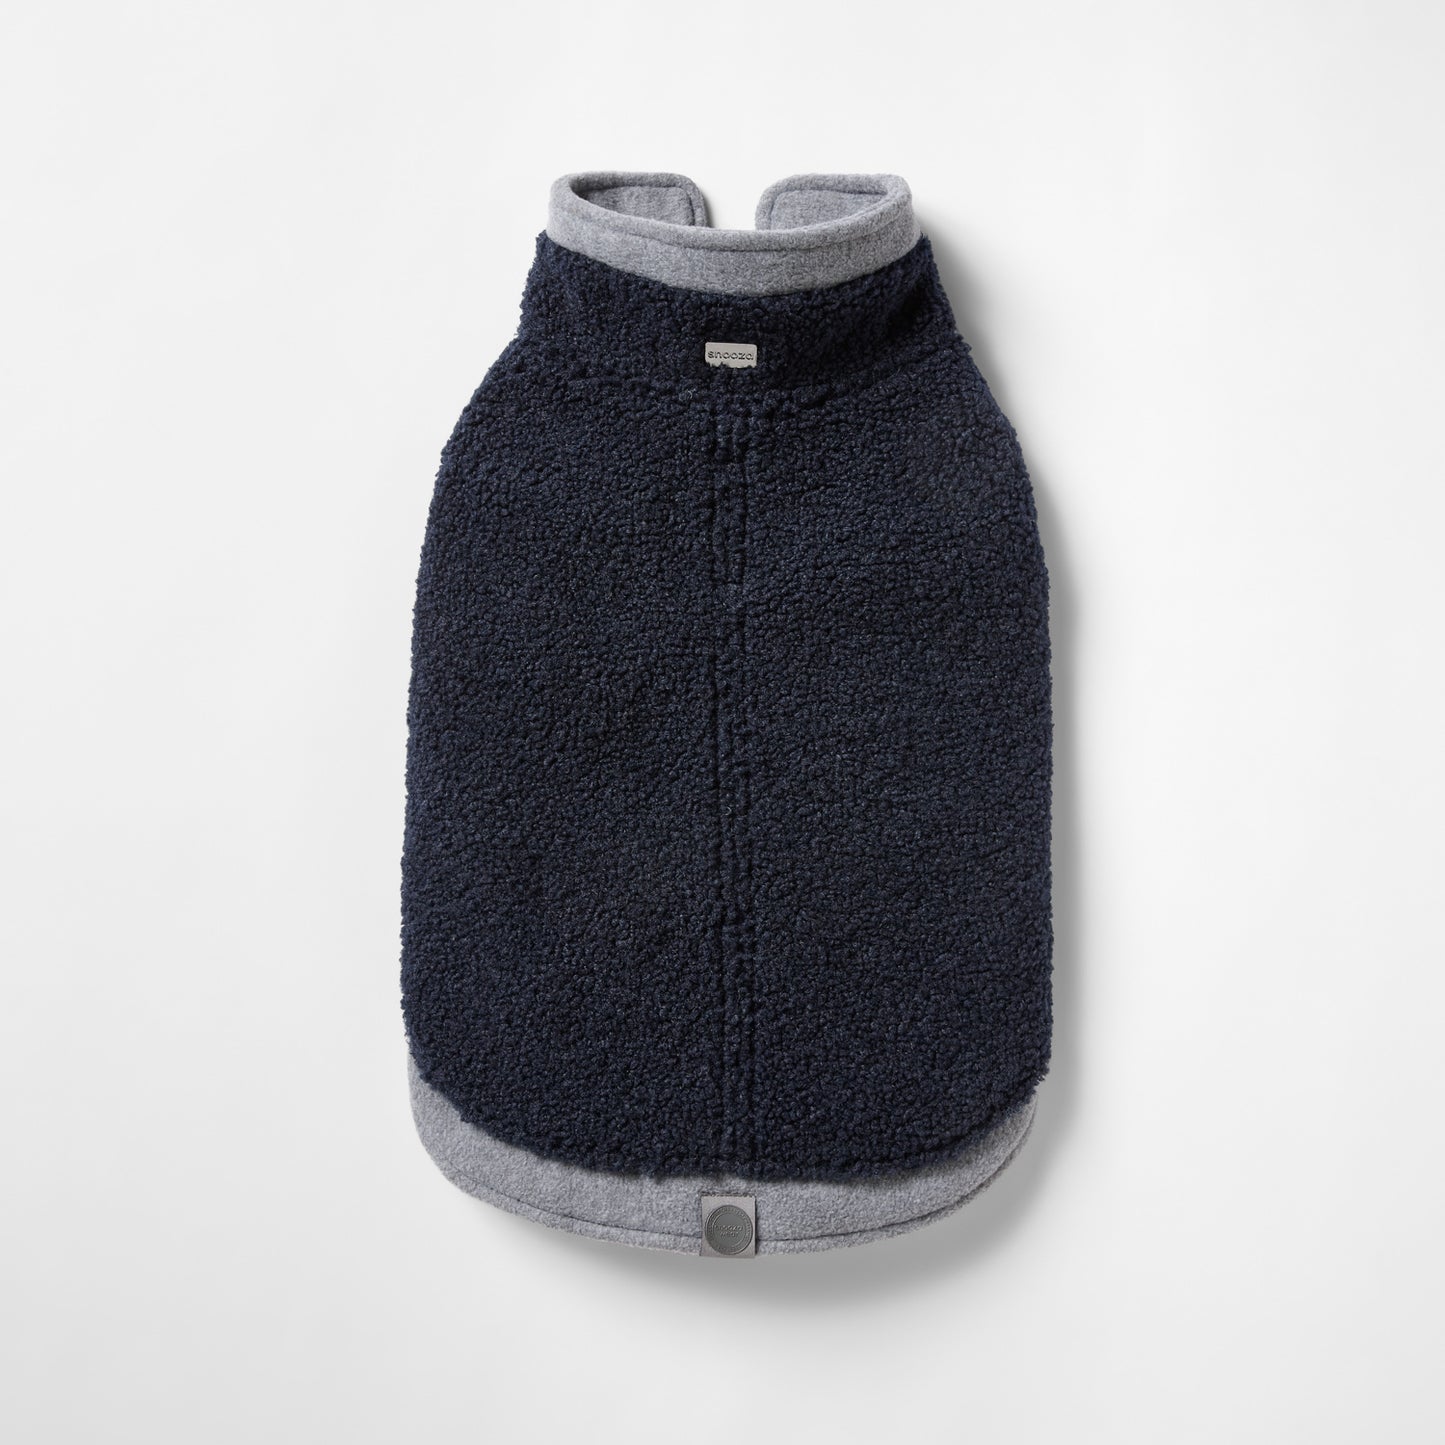 Snooza Wear - Teddy Double Detail Coat - Navy/Grey